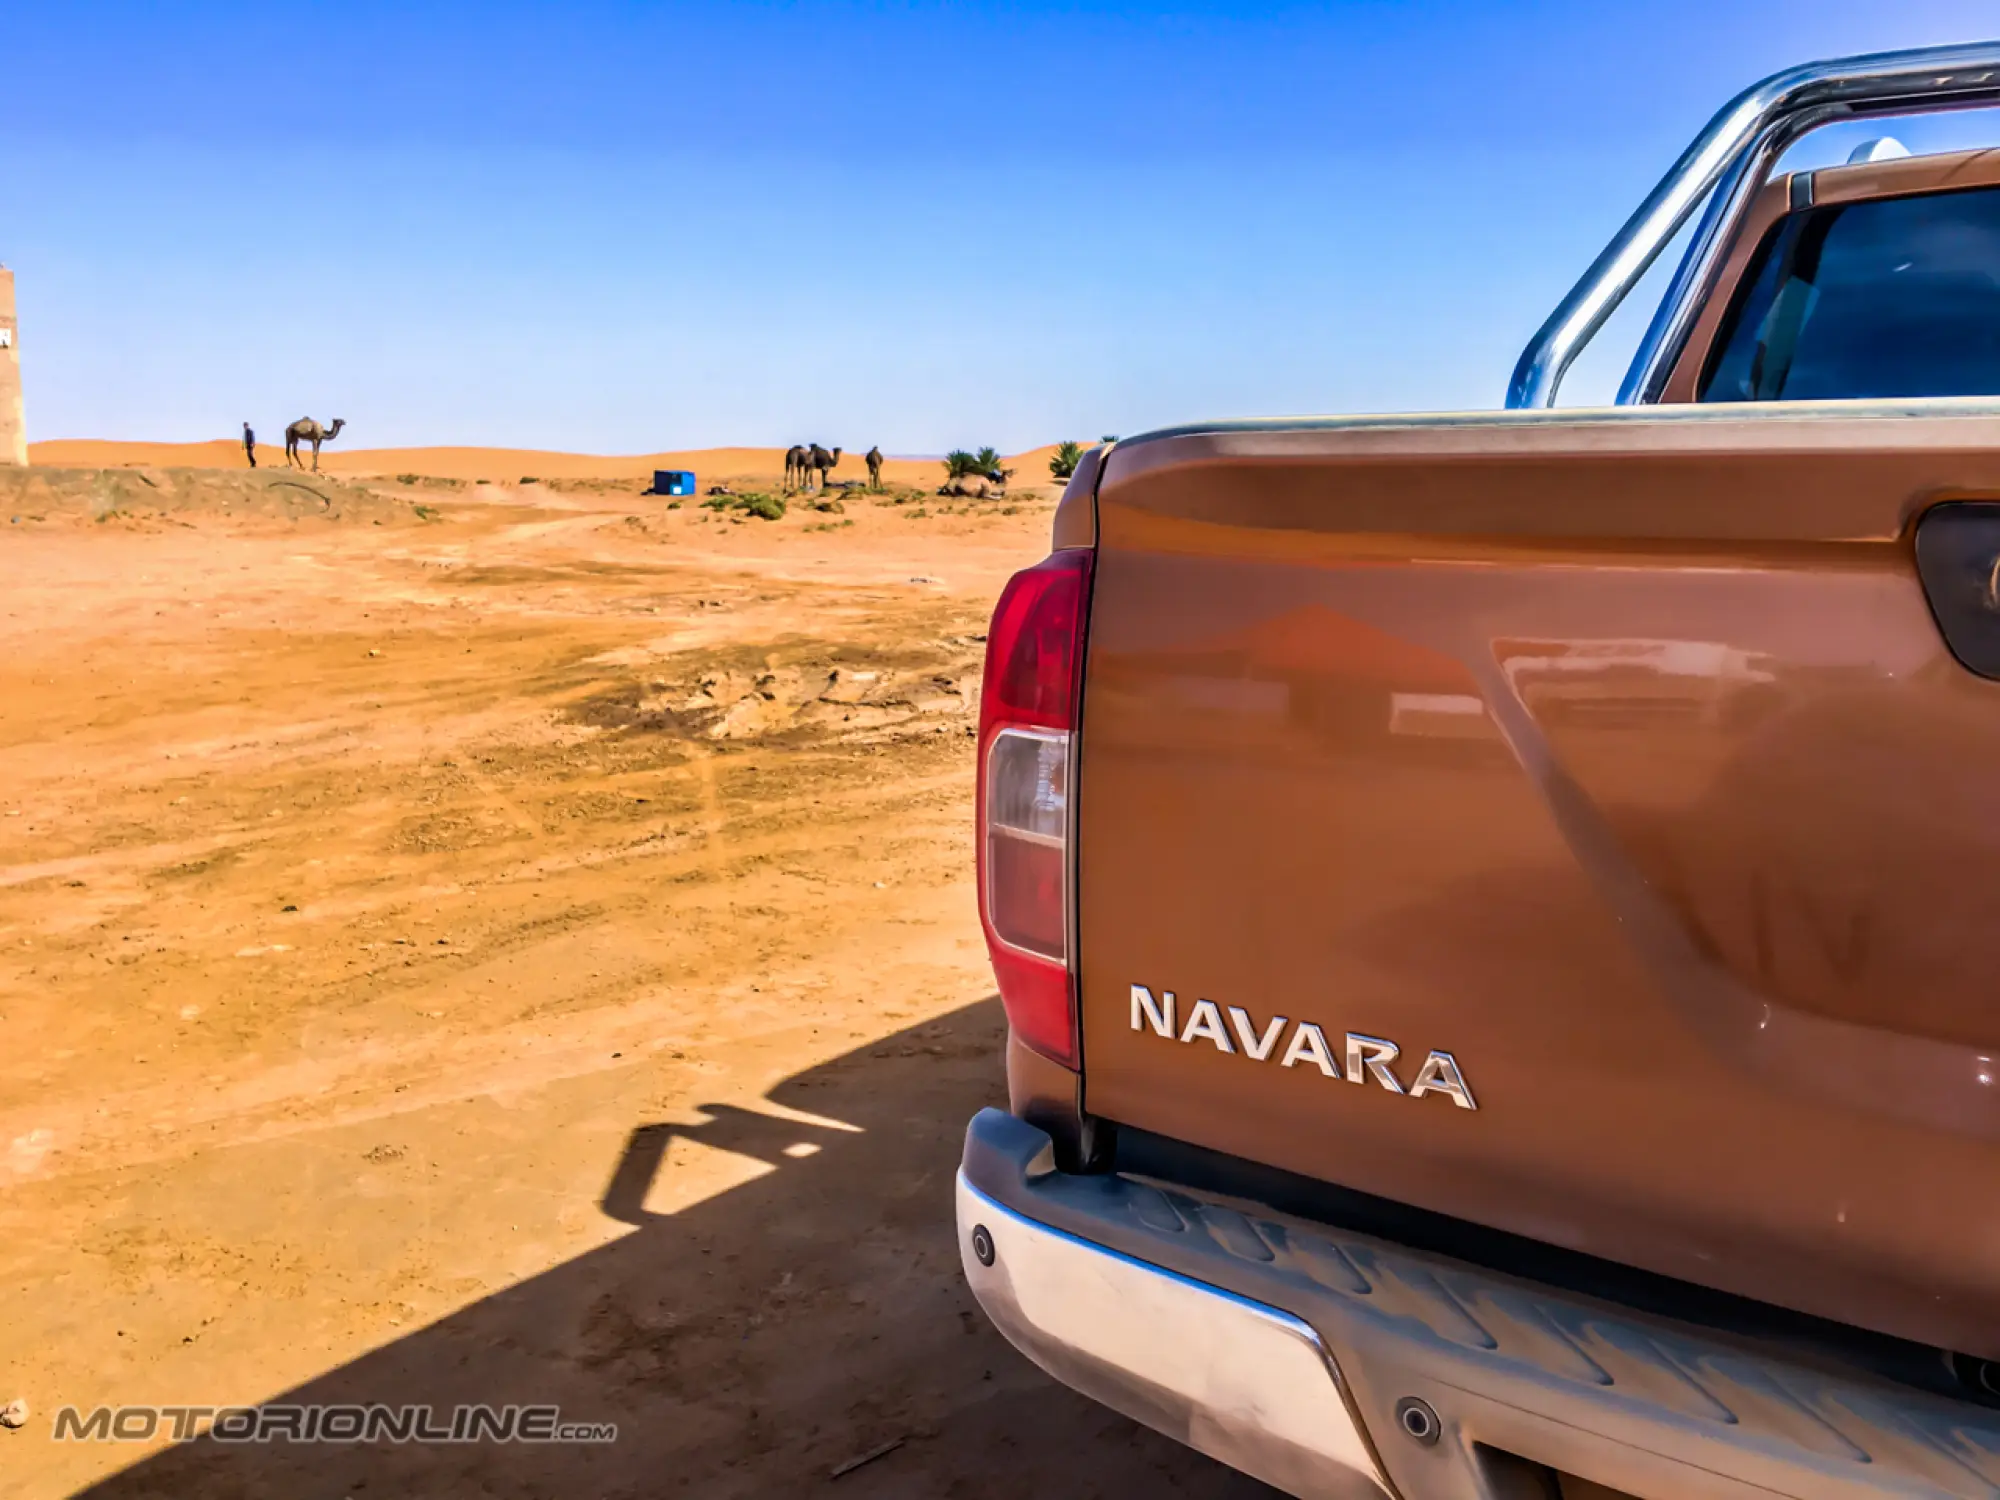 Nissan Navara MY 2016 - Sfida alle Dune del Sahara - 51